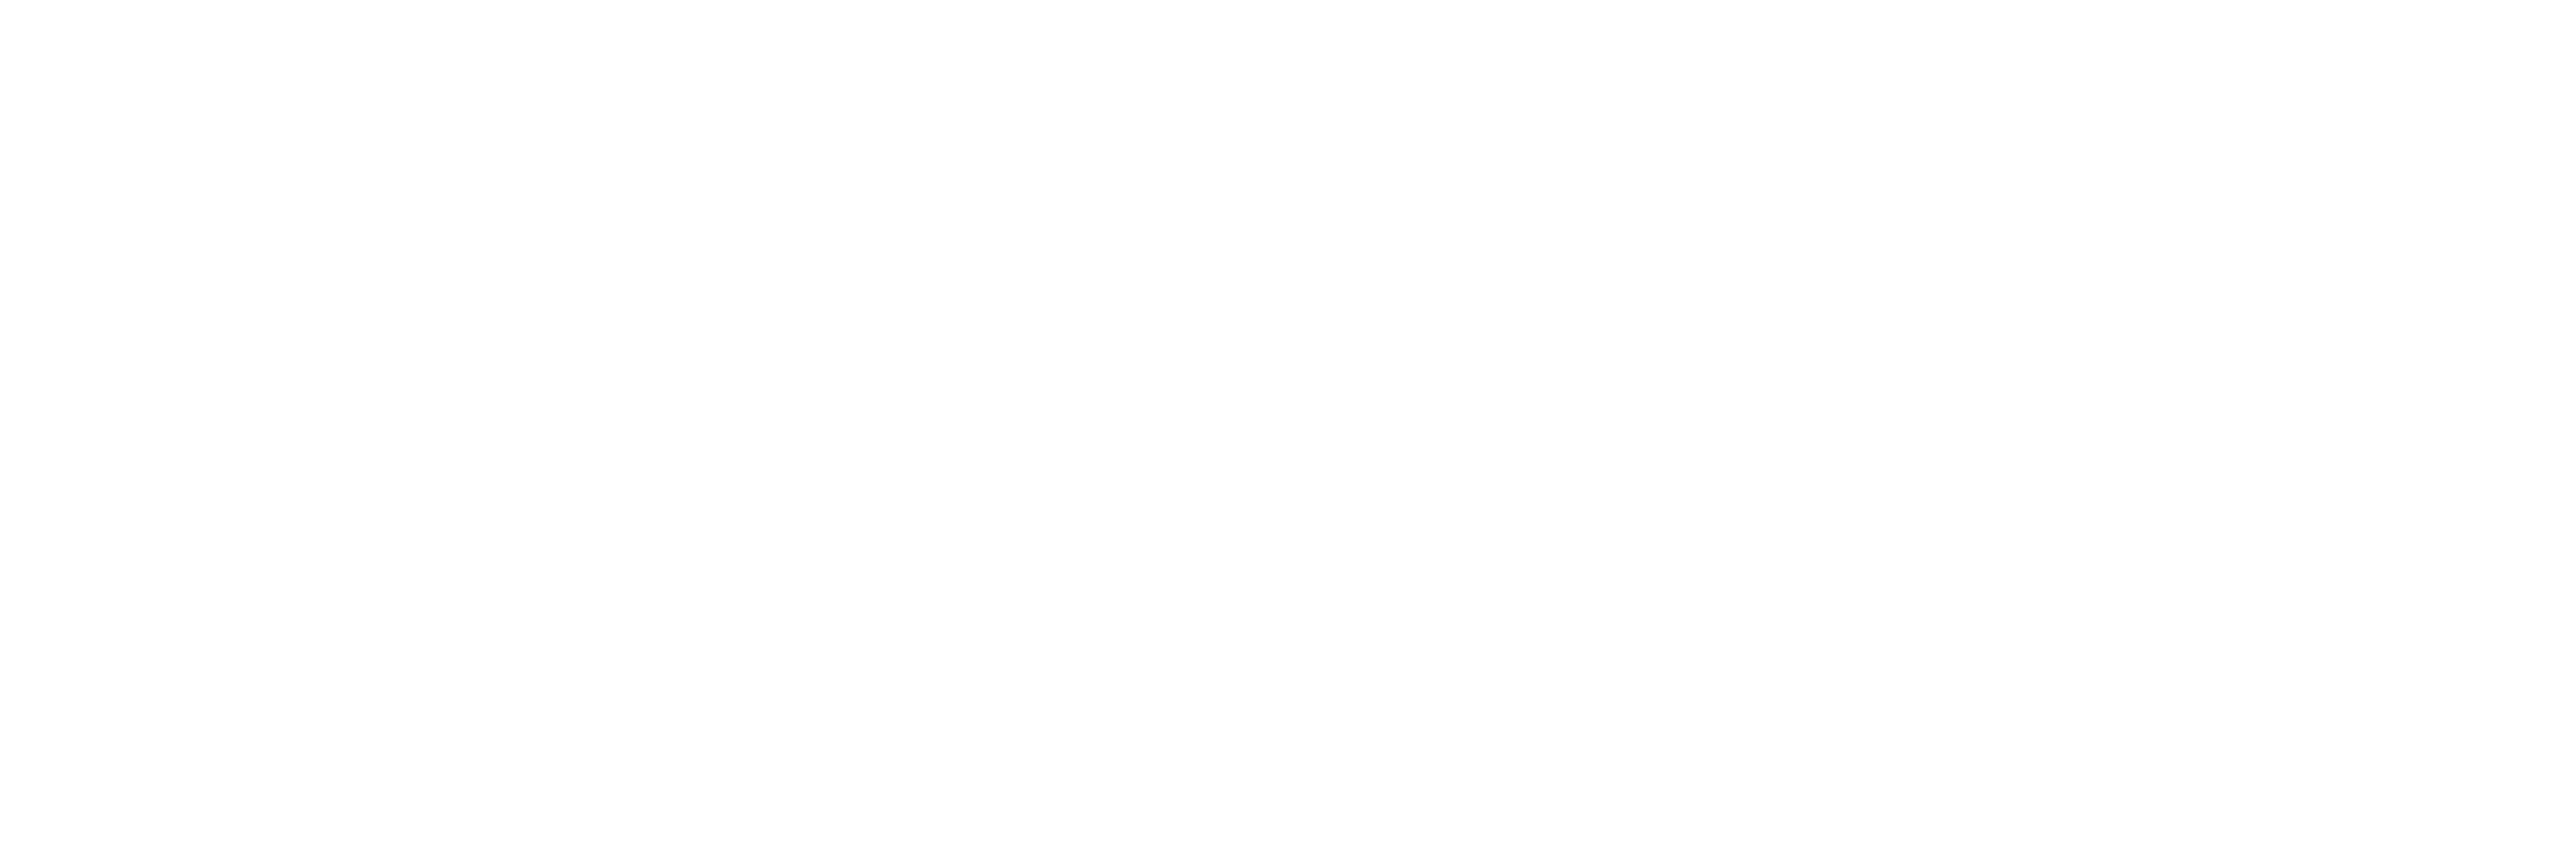 [Translate to Englisch:] DSMZ Logo